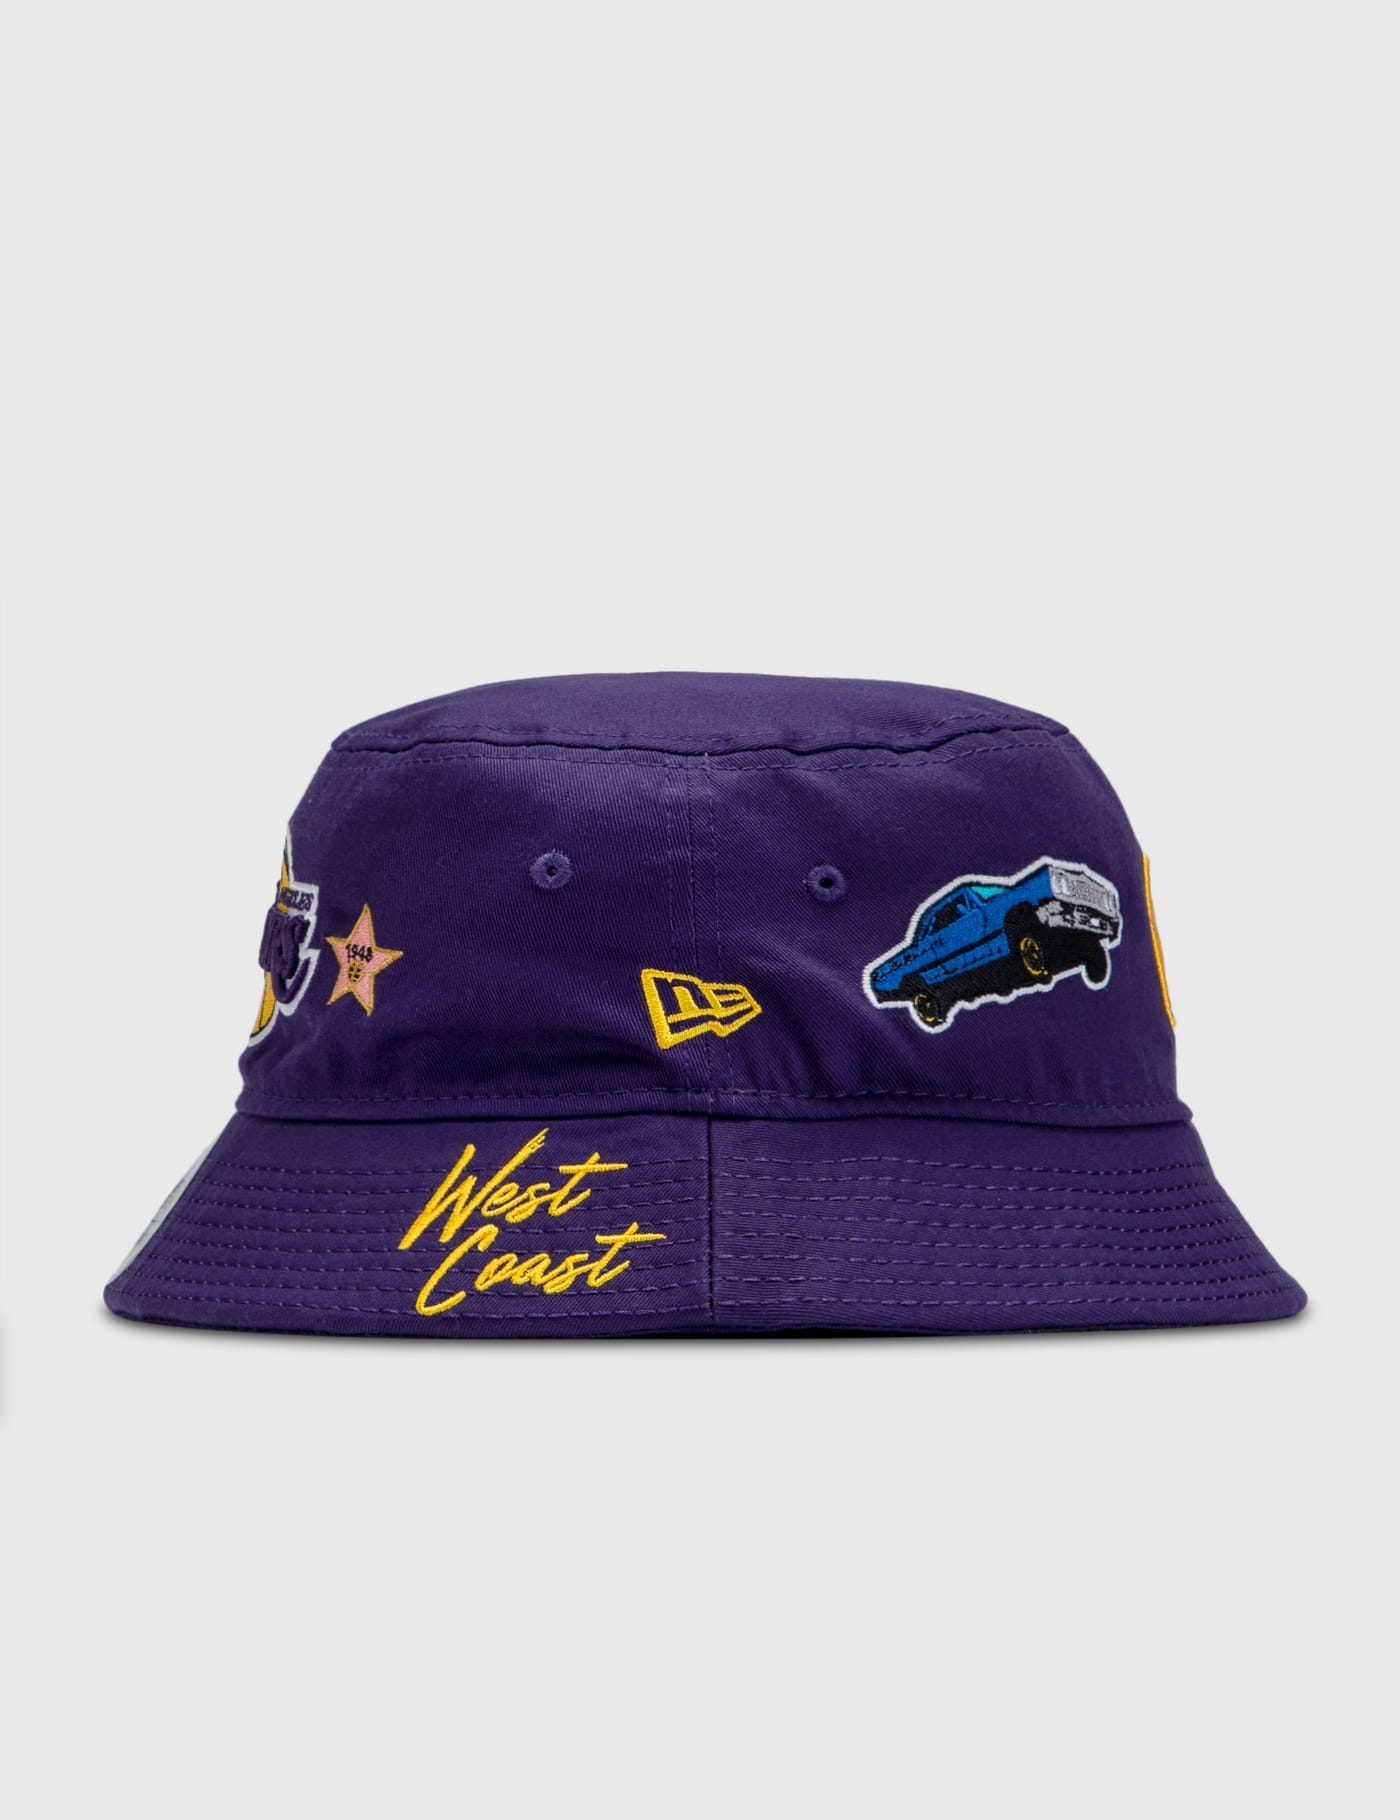 discount 70% Purple Single Camaïeu hat and cap WOMEN FASHION Accessories Hat and cap Purple 